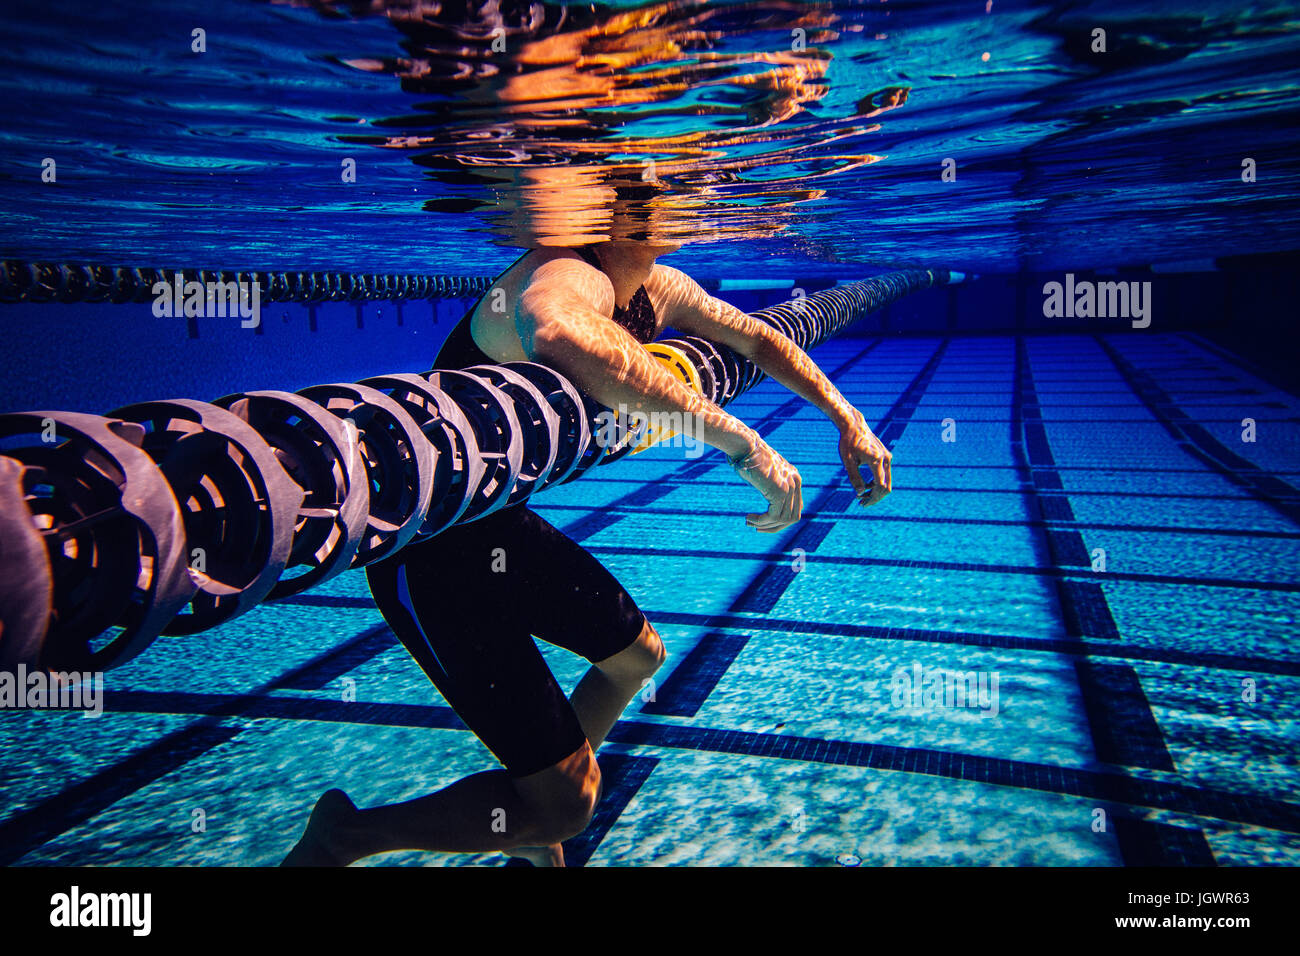 Swimmer resting on lane divider in pool Stock Photo